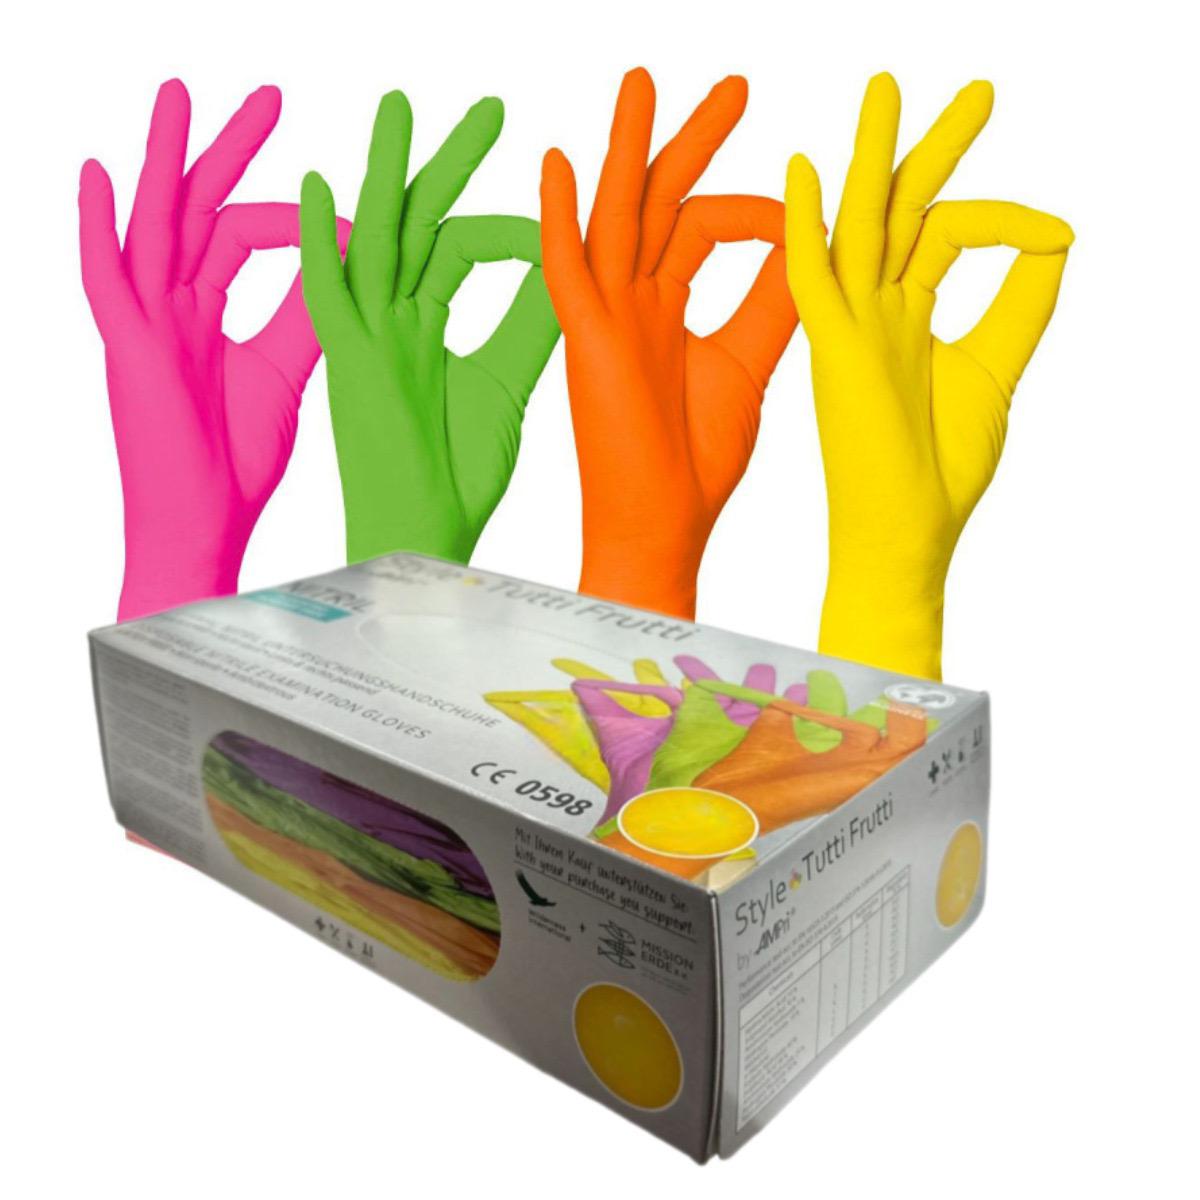 Перчатки STYLE by AMPri нитриловые, цвет Разноцветный (Tutti Frutti), размер M